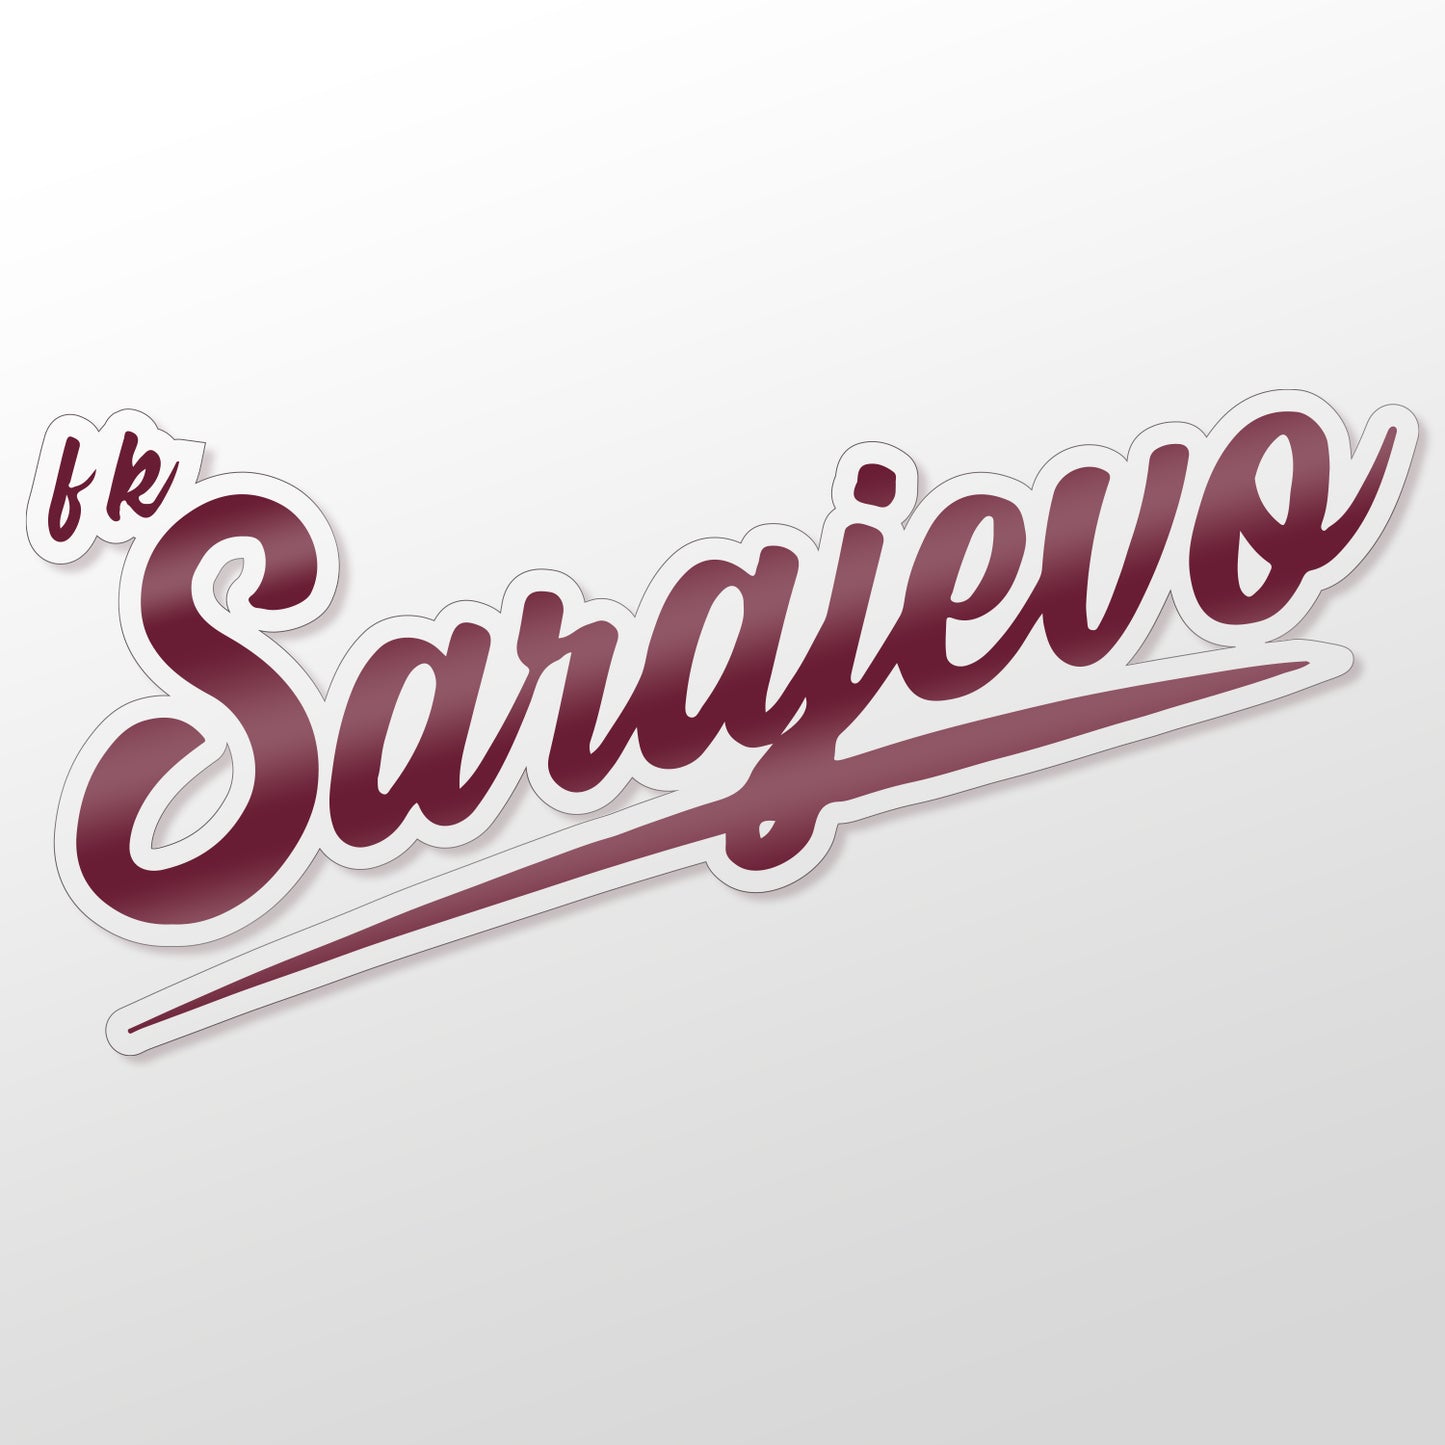 FK Sarajevo Script Decal - Bordeaux